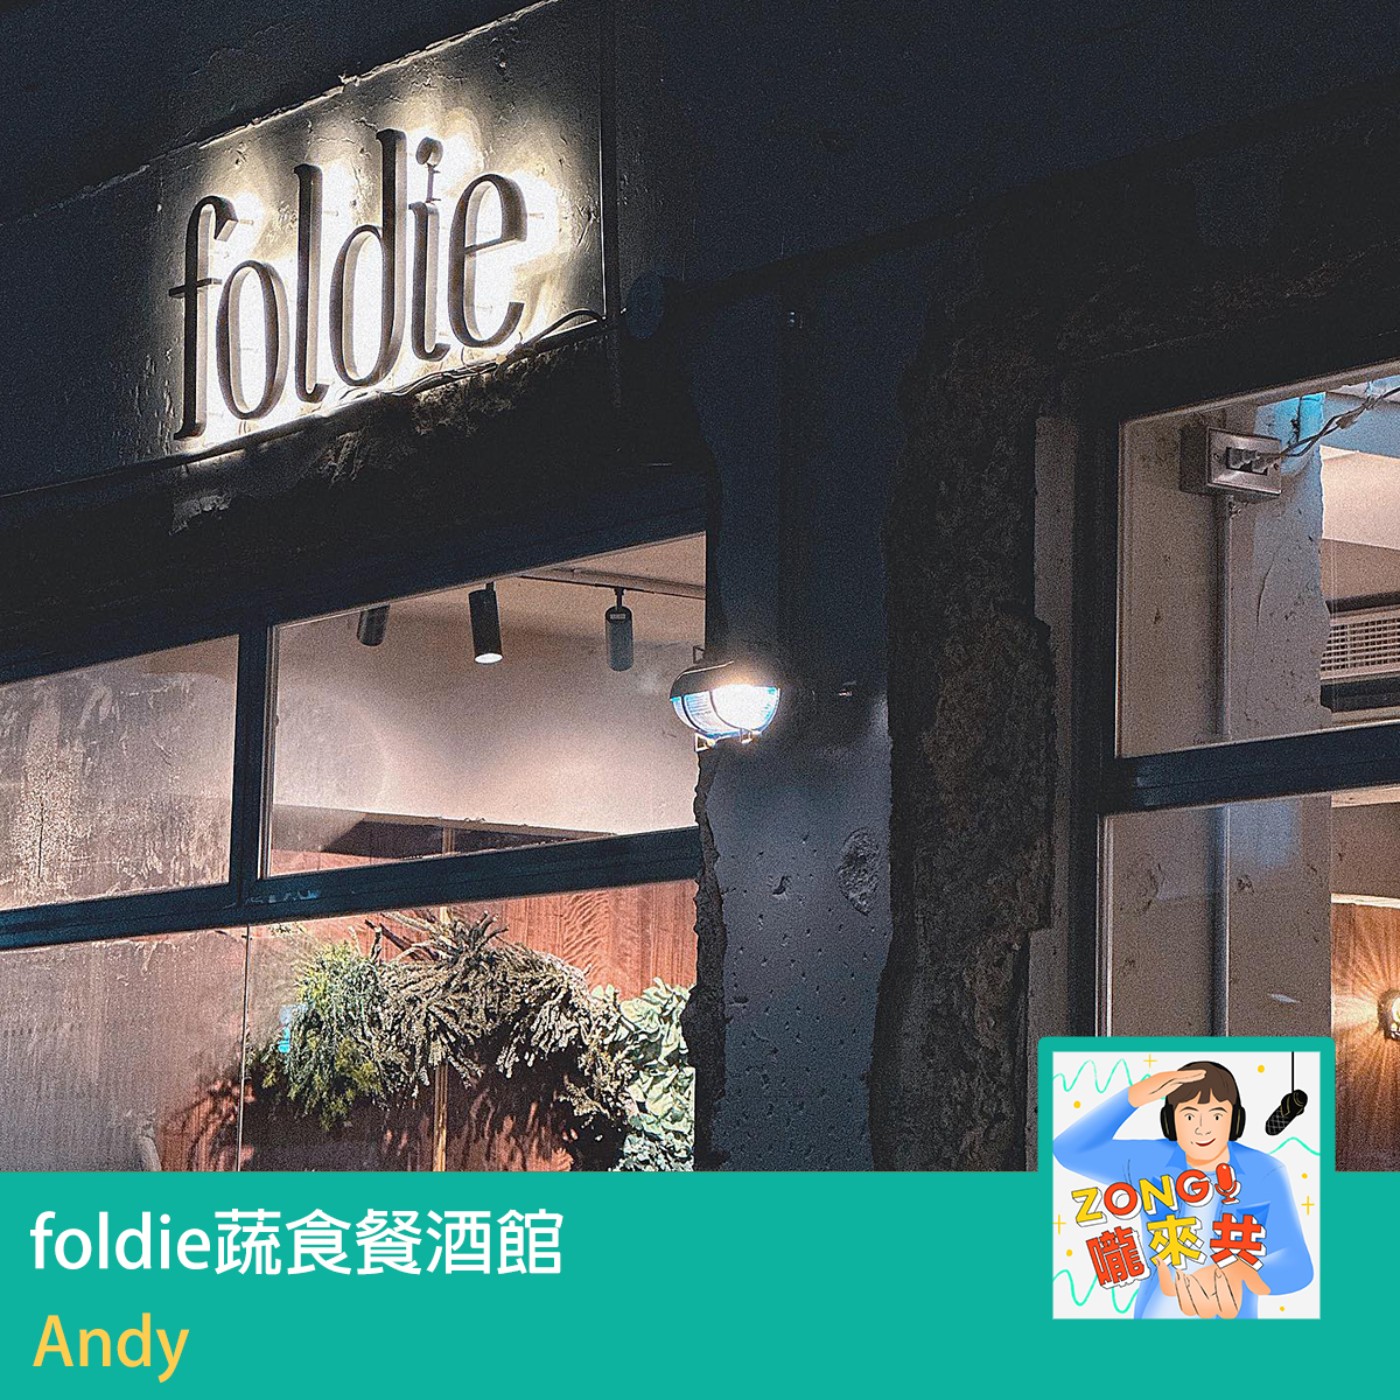 # 251_fold是折疊重組 ，foodie熱愛品嚐美食，兩個相加就是「 foldie蔬食餐酒館」，主理人Andy透過他學建築、紐約回國的角度，擴大綠色邊界